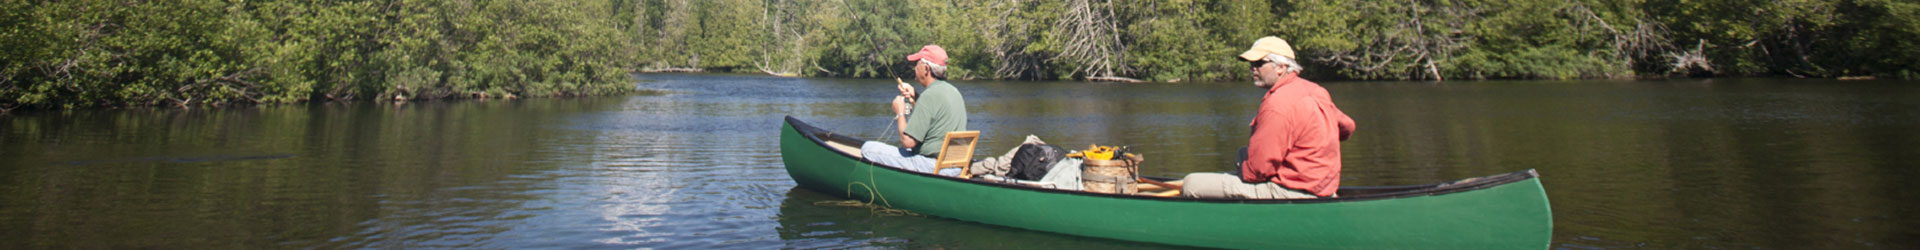 canoeing-brule-river